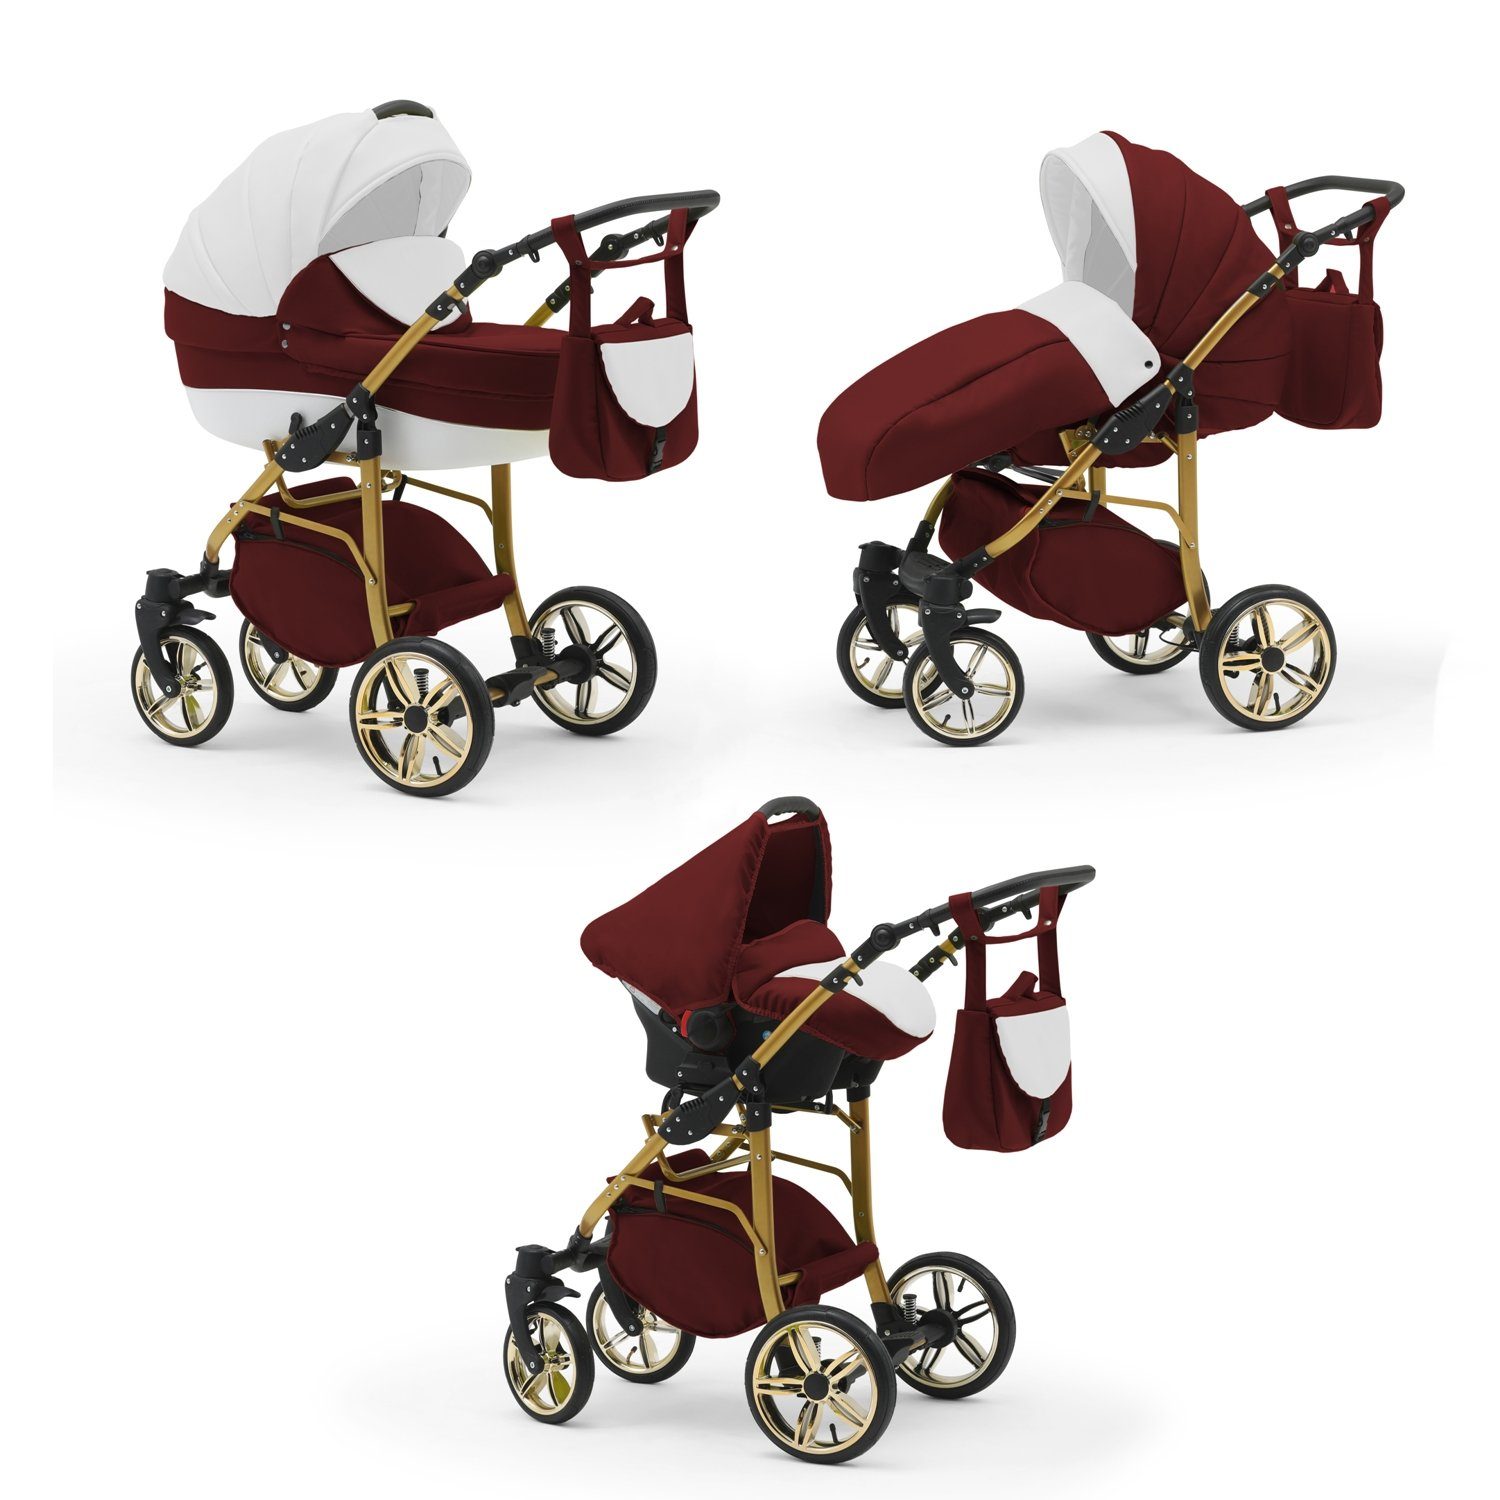 Farben 46 16 in in 3 babies-on-wheels Teile Bordeaux-Rosa-Weiß Kinderwagen-Set Kombi-Kinderwagen Cosmo Gold- 1 -